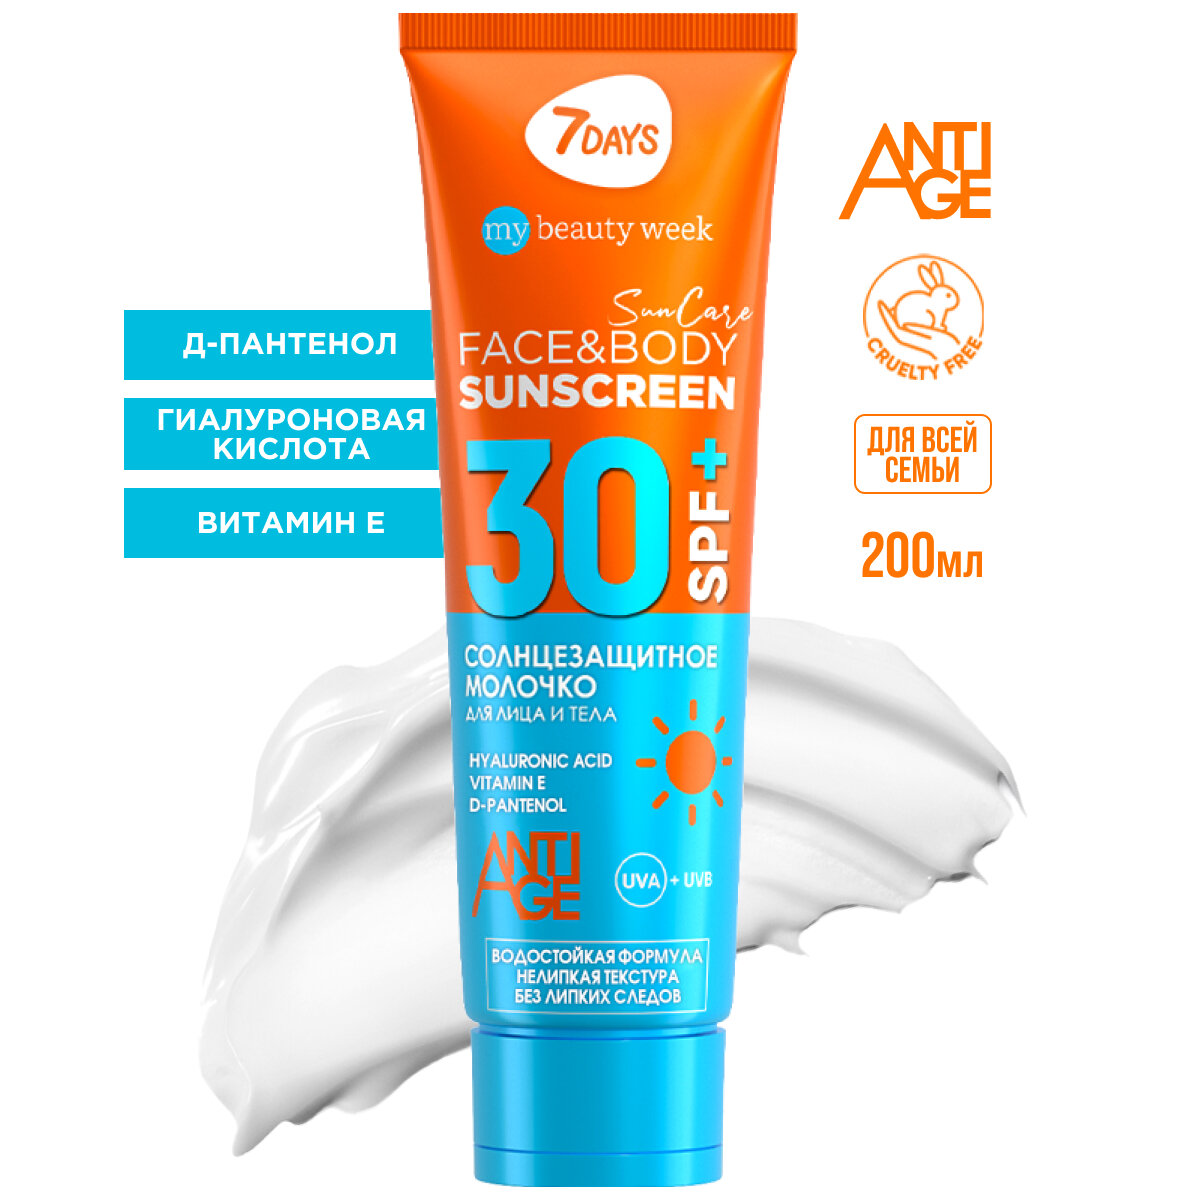 7DAYS Солнцезащитный крем для лица и тела SPF 30 увлажняющий, защита от солнца SUN CARE, 200 ml